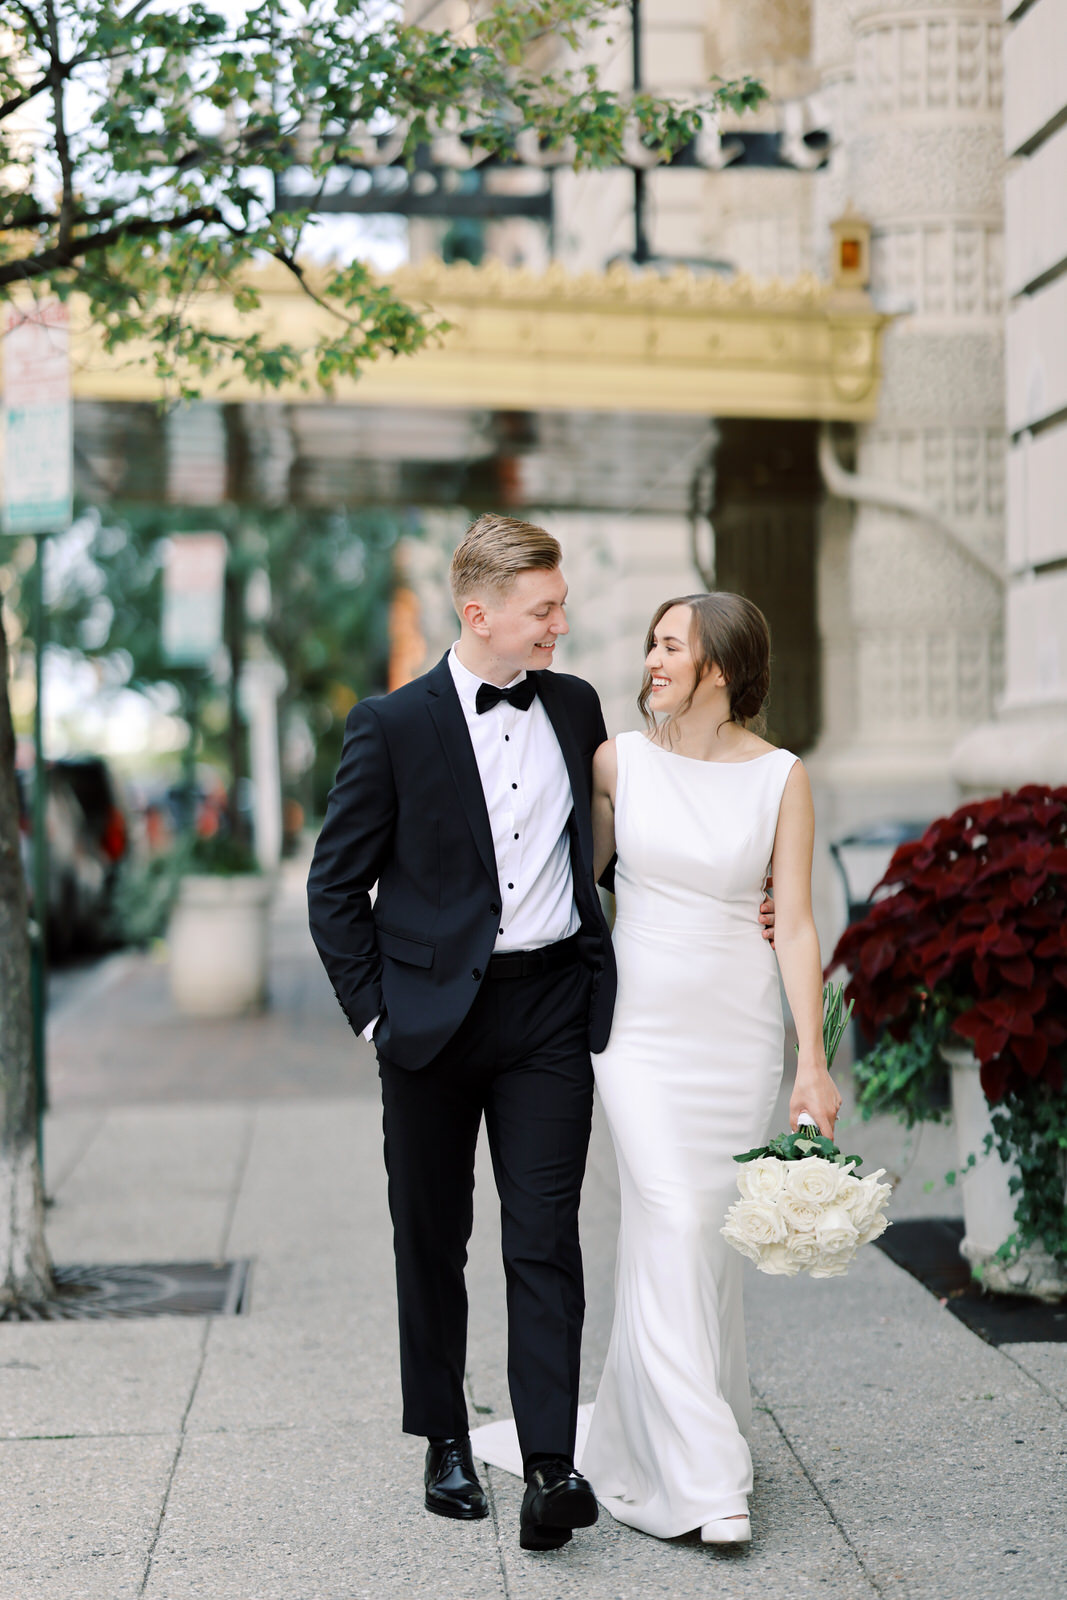 Modern Baltimore wedding photographer photographs an elegant wedding at the historic Belvedere Hotel.